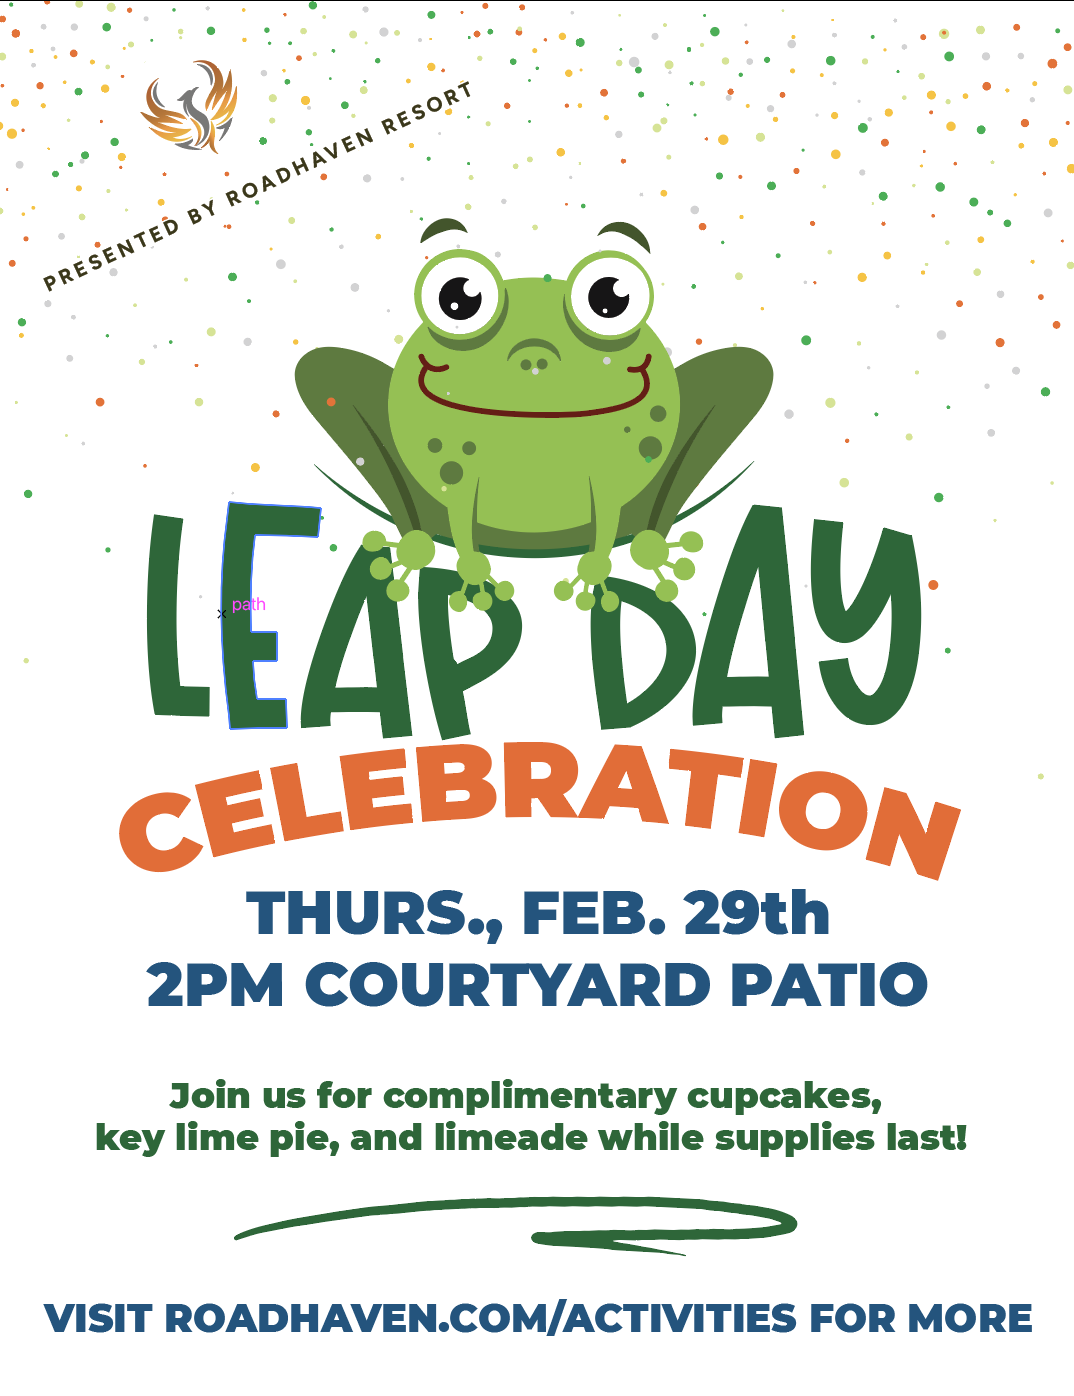 Leap Day Celebration flyer - Free event